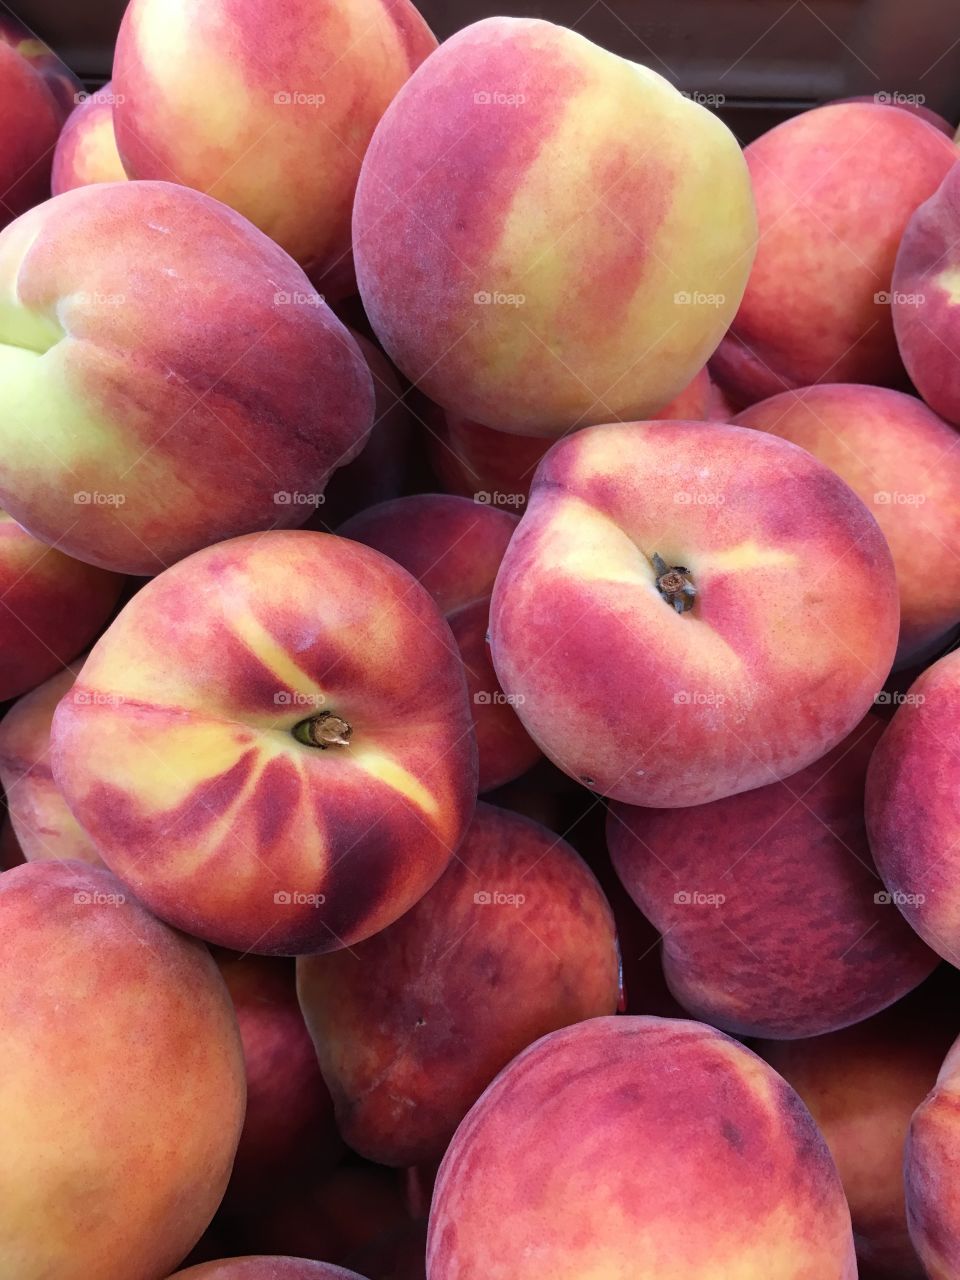 Peaches Or nectarines 